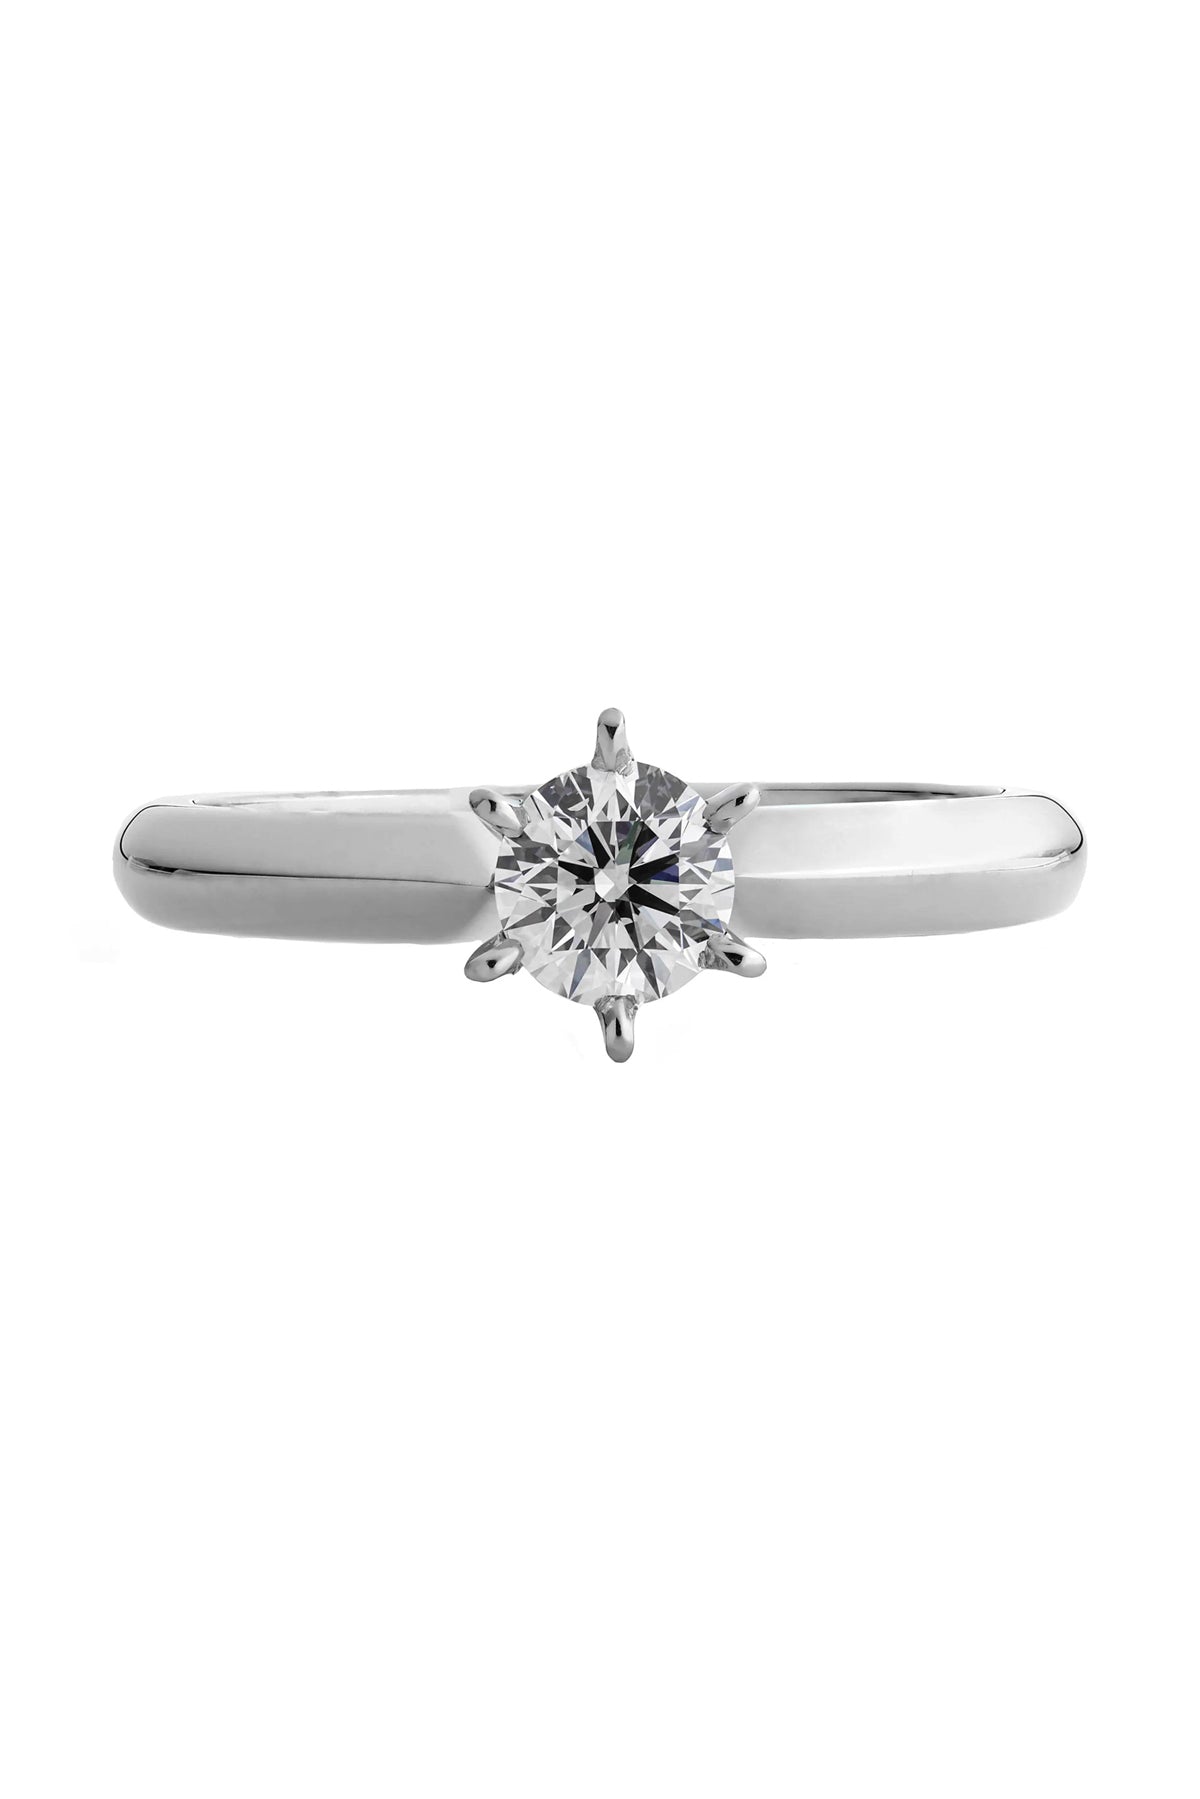 LeGassick 0.50 carat Diamond Solitaire Engagement Ring available at LeGassick Diamonds and Jewellery Gold Coast, Australia